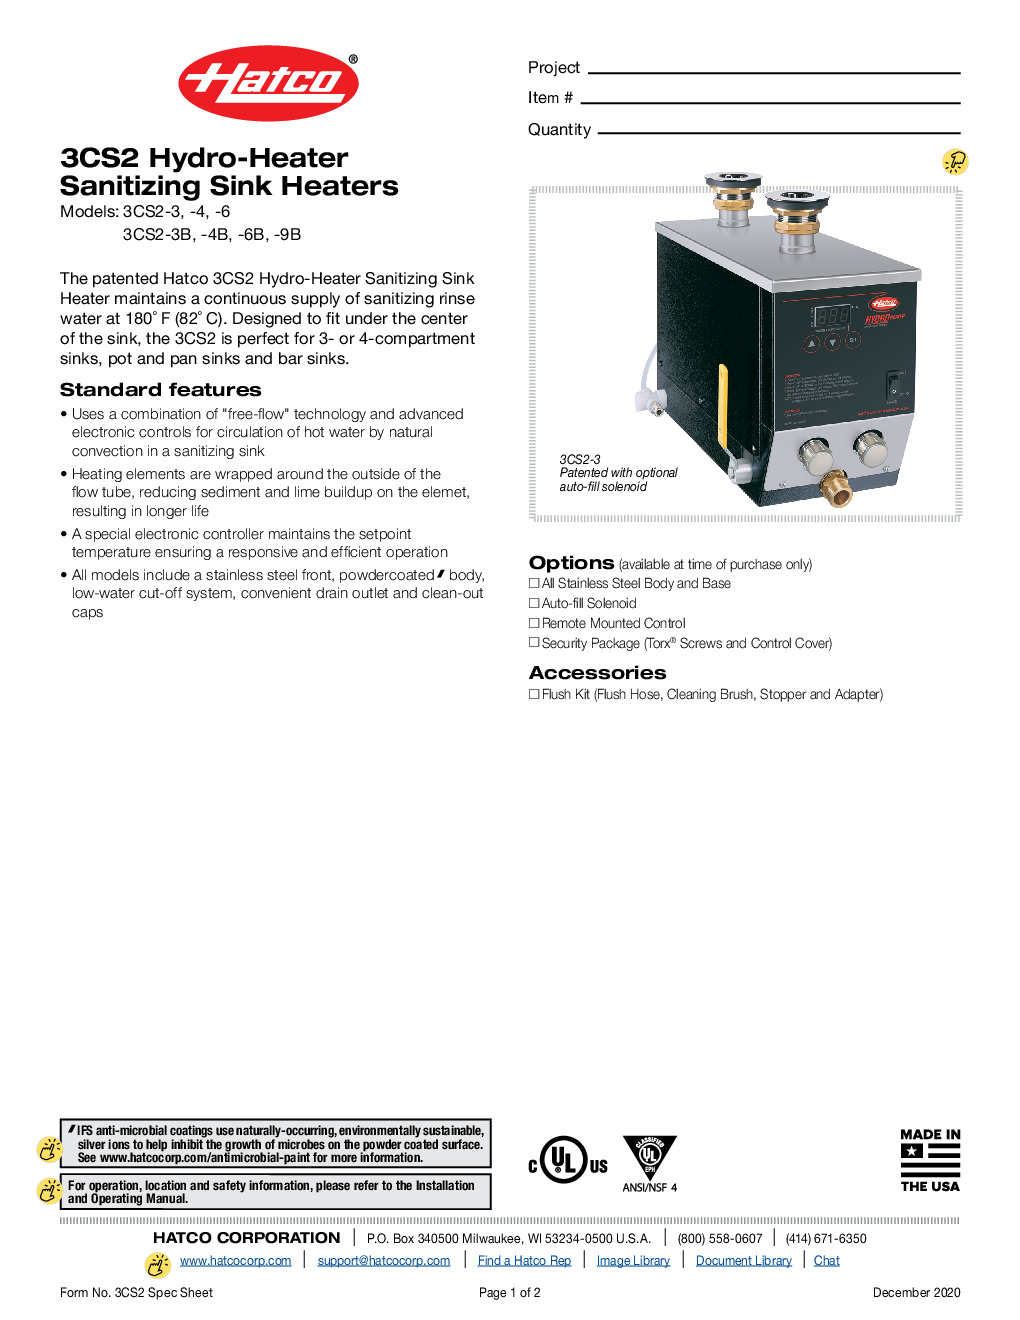 Hatco 3CS2-6/B Electric Sink Heater